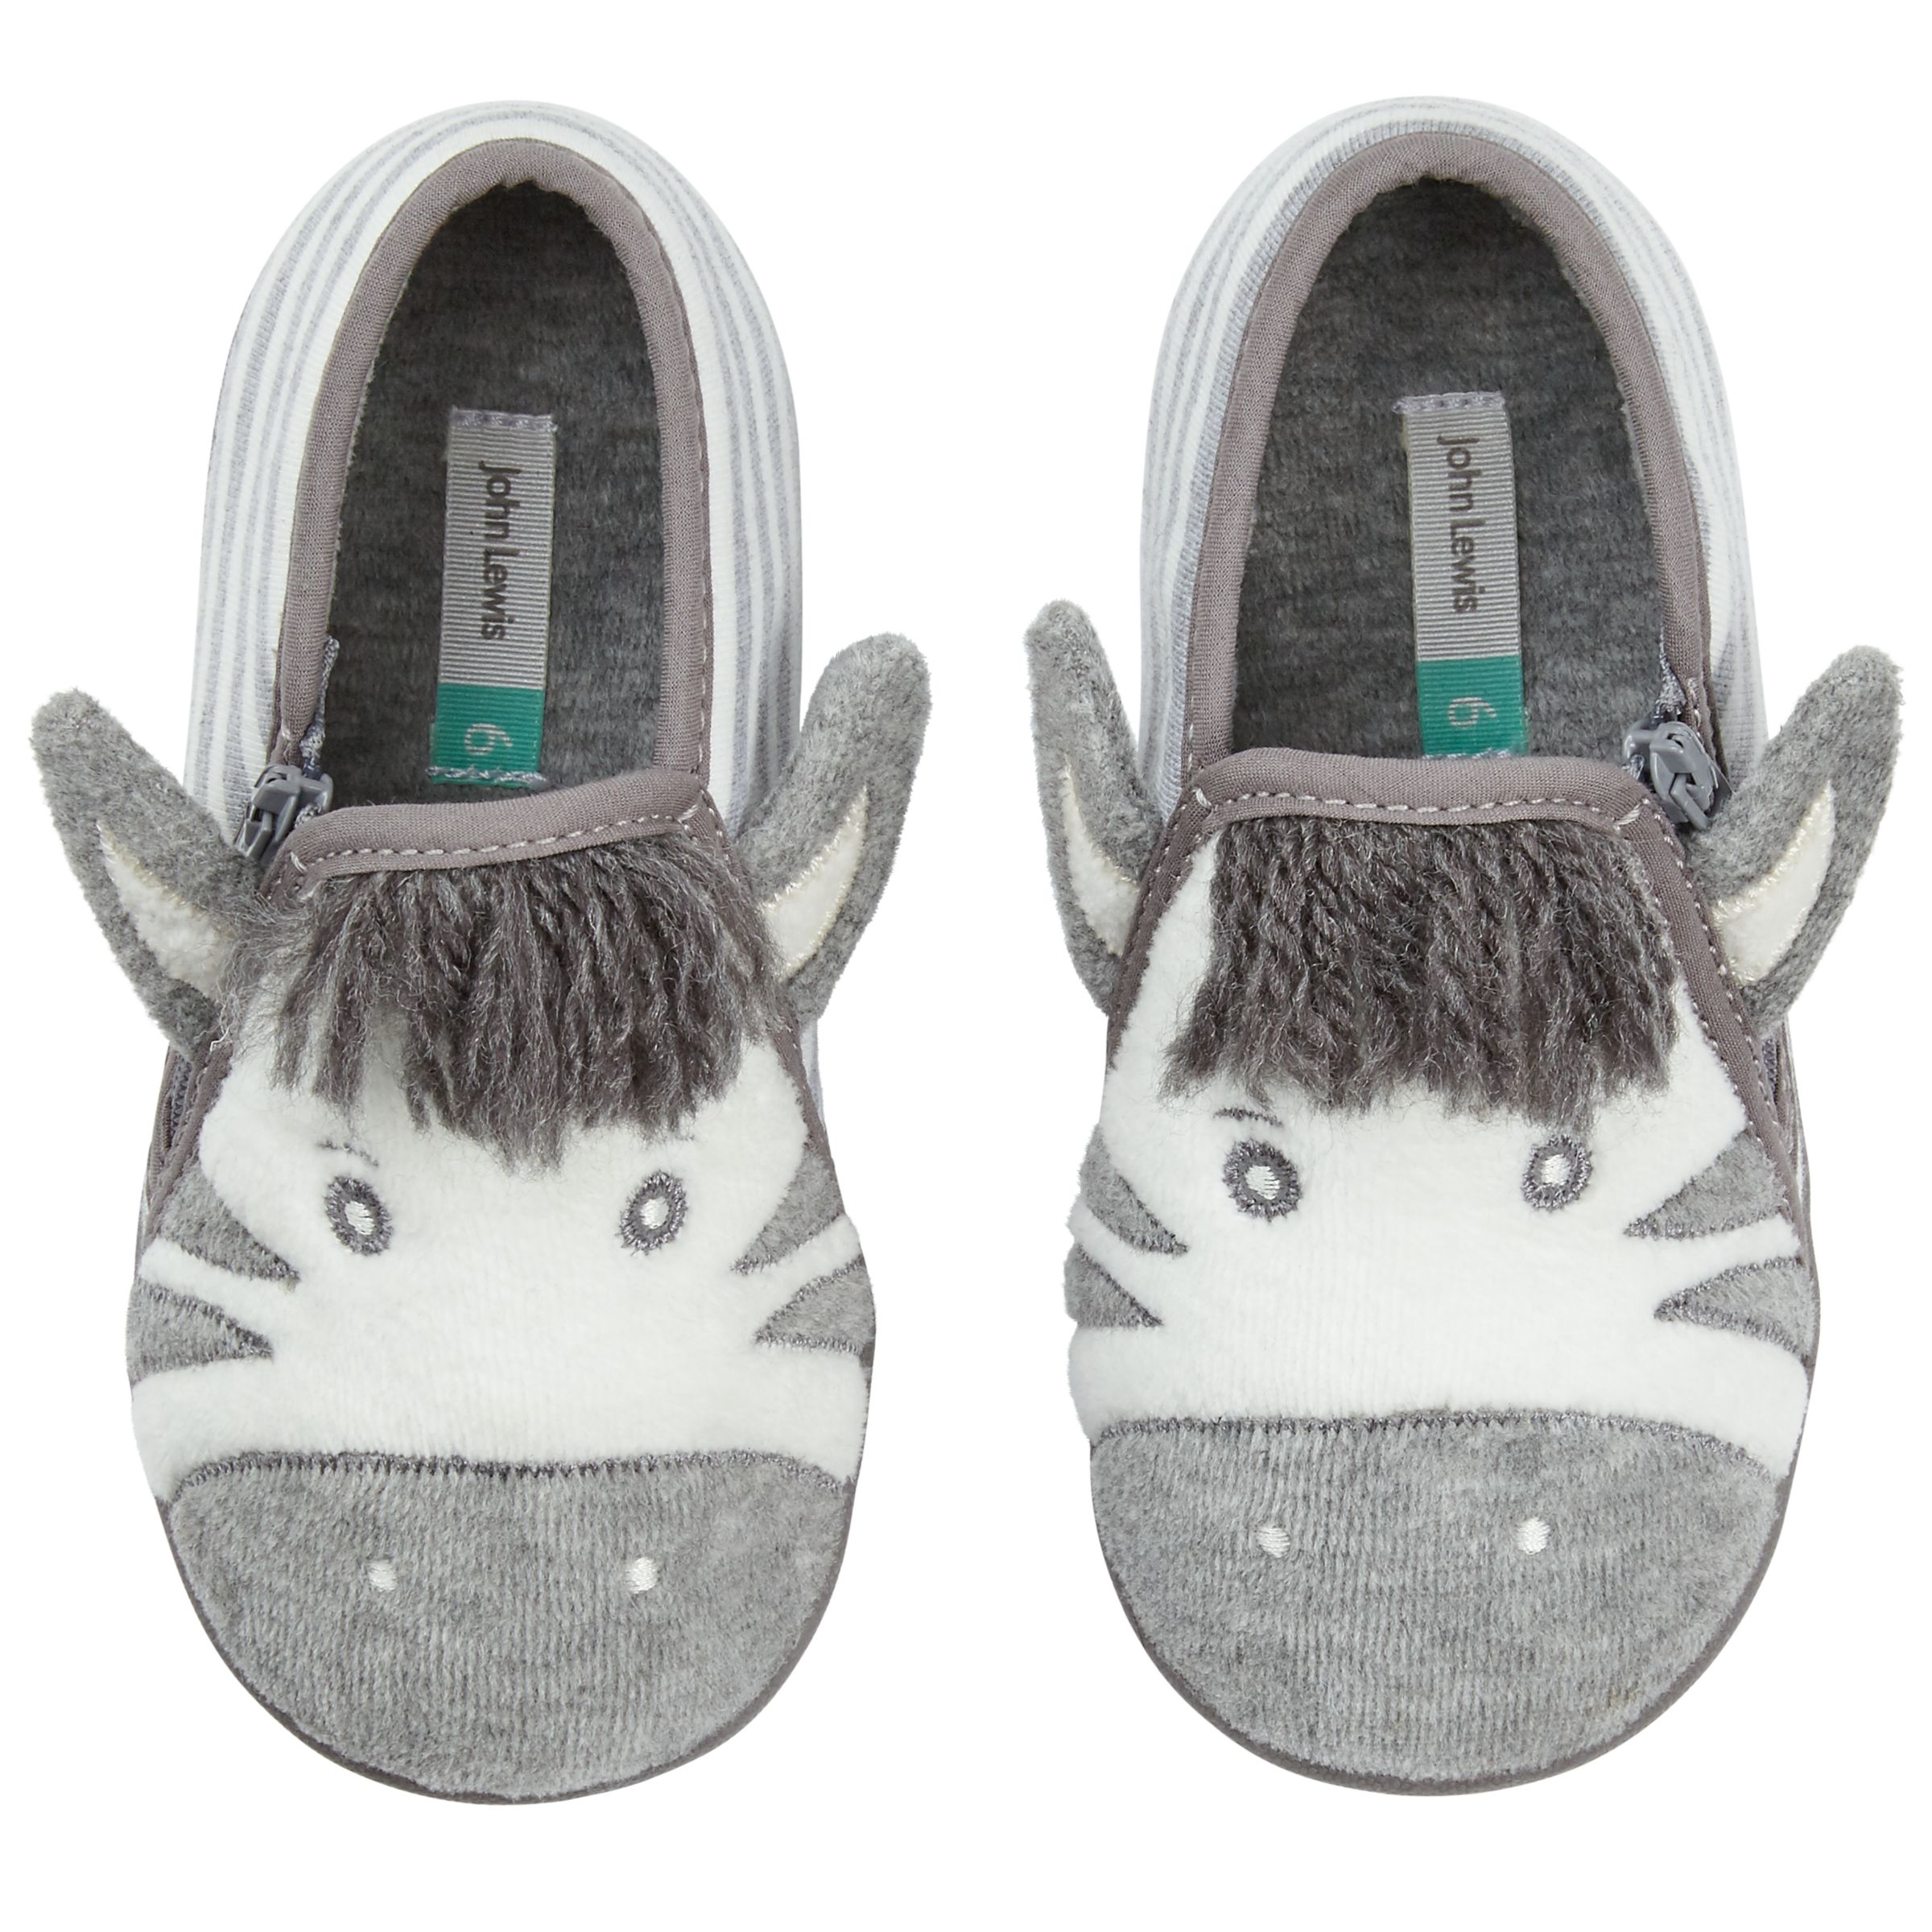 John Lewis & Partners Baby Zebra Slippers, Grey